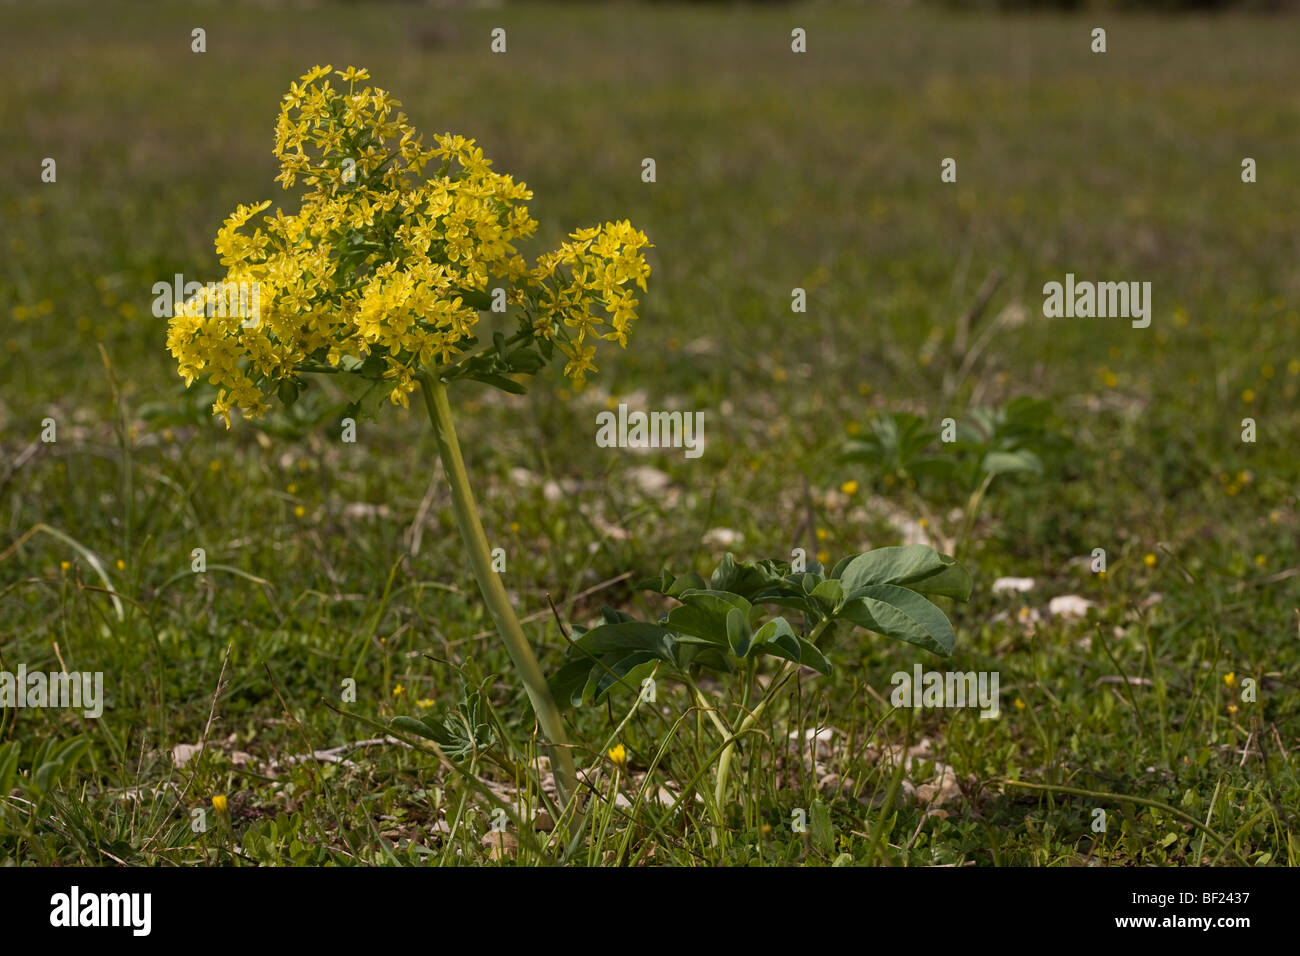 Leontice leontopetalum - very rare cornfield weed in eastern Europe, more common in Turkey Stock Photo